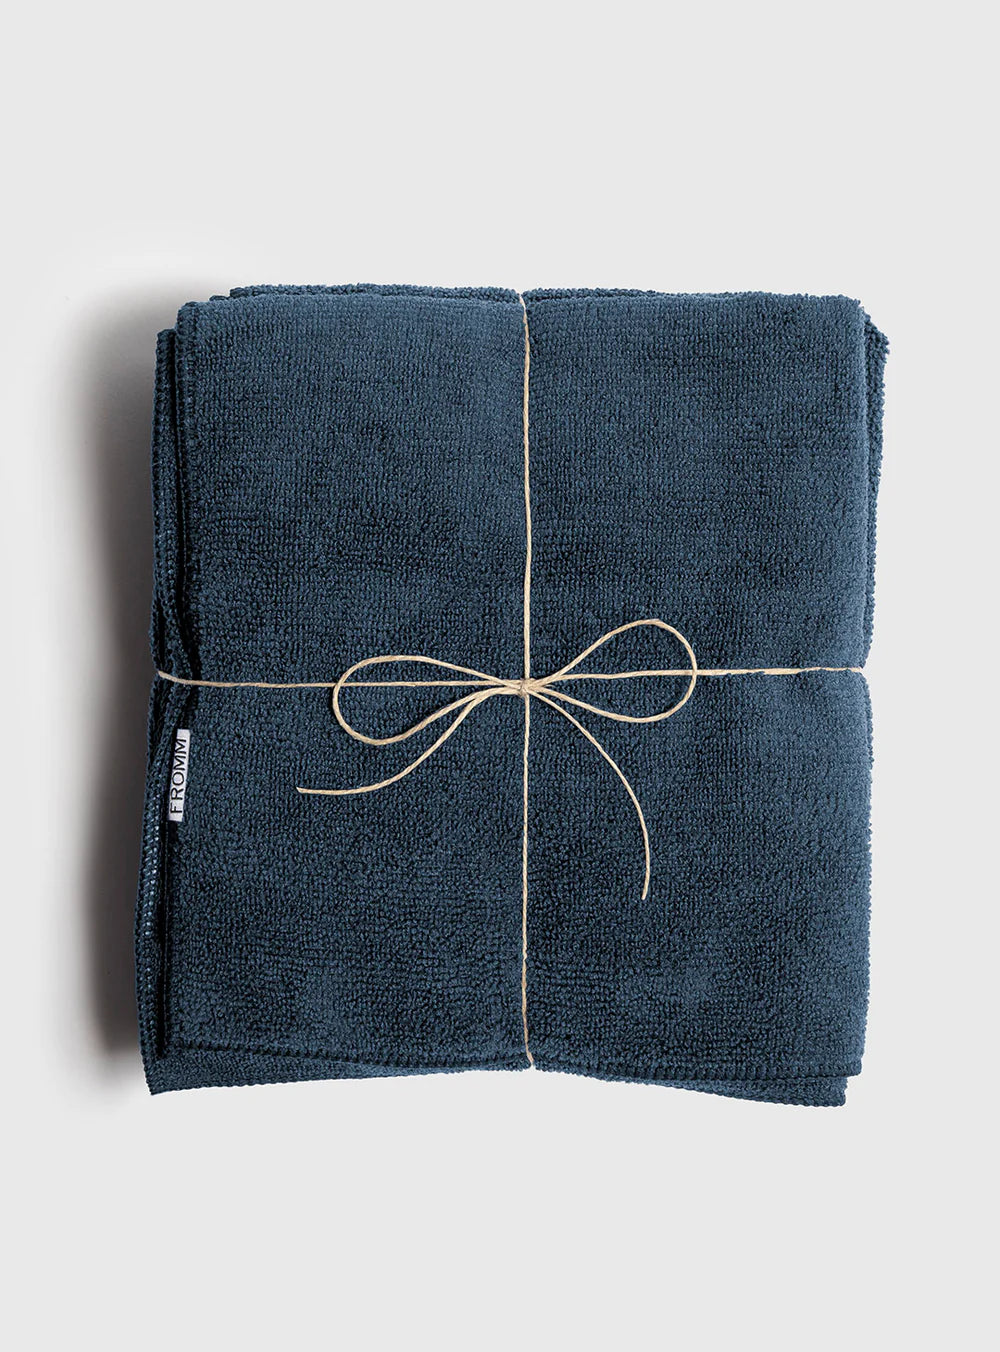 FROMM Softees Microfiber Håndklæder 10 stk. Navy Blå